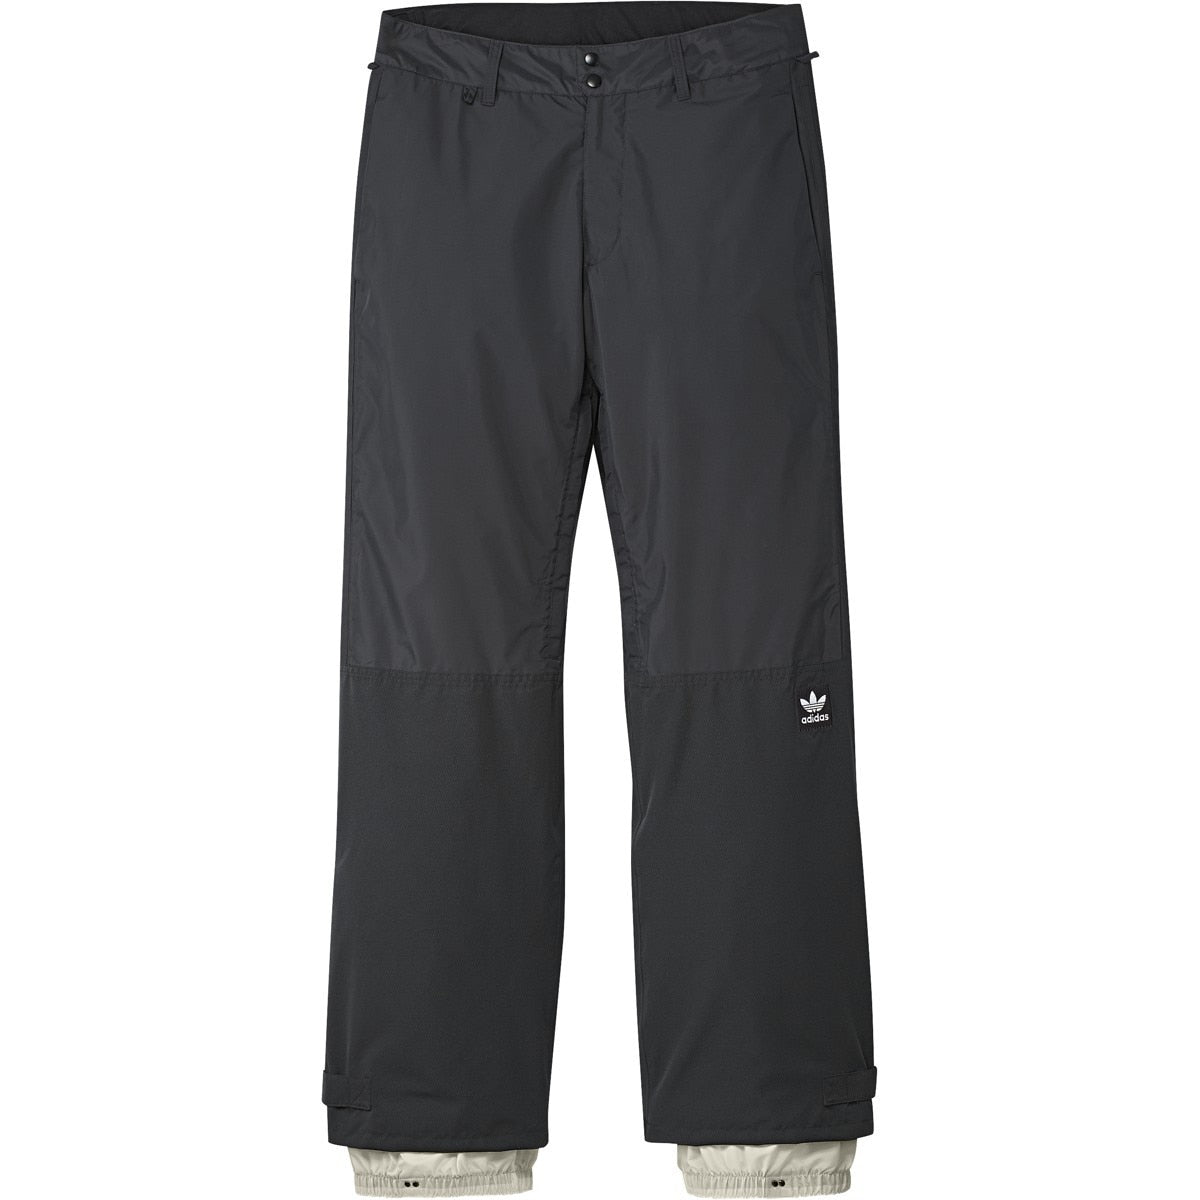 Adidas Riding Pant Snowboard Pants - Carbon/Cream White